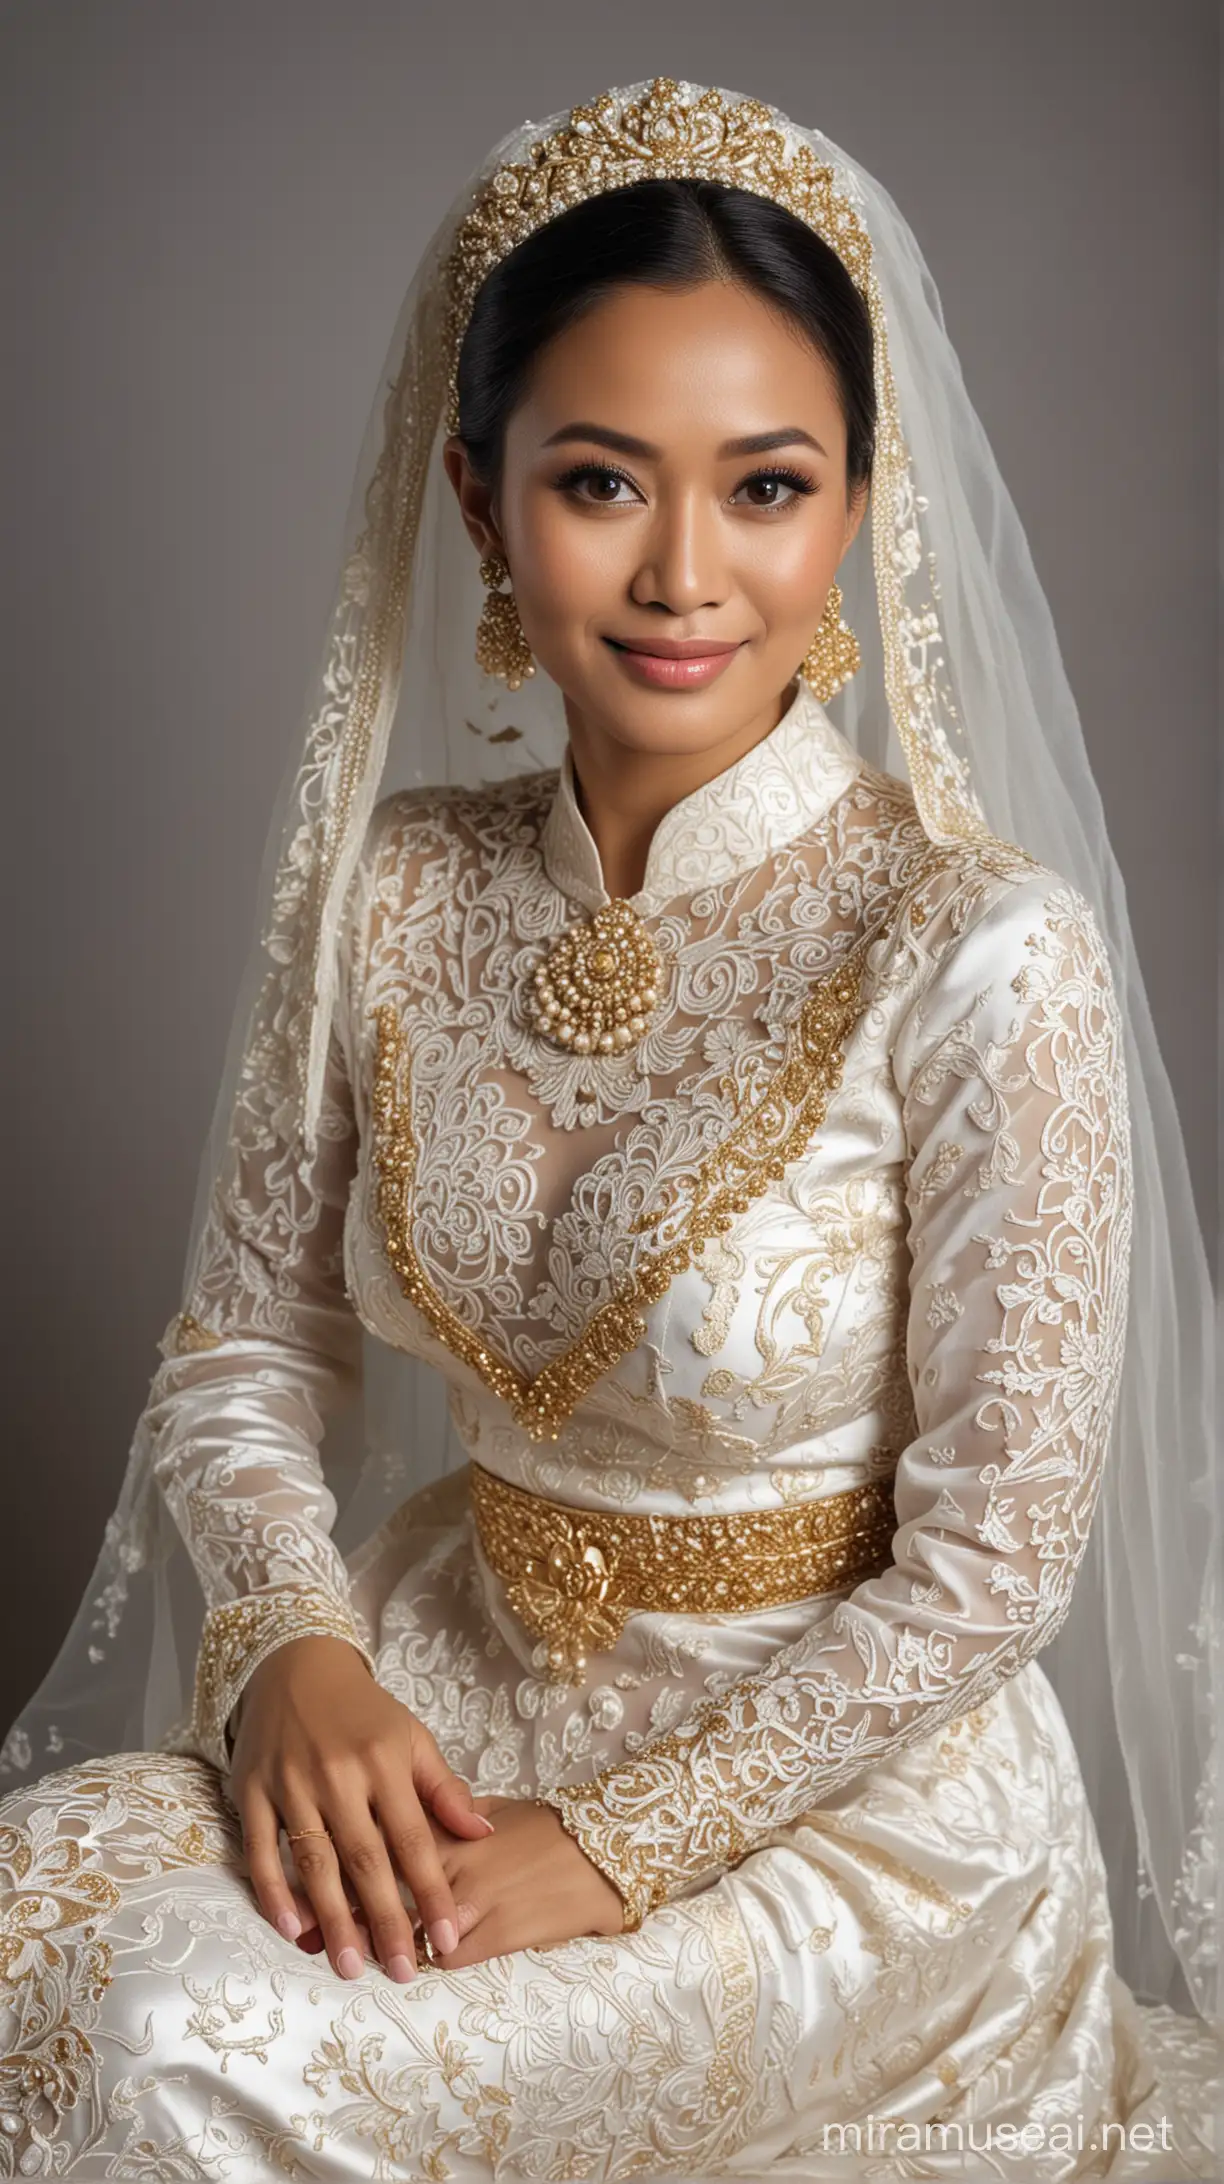 Wanita indonesia cantik, memakai baju pengantin melayu, 41 tahun, anggun duduk